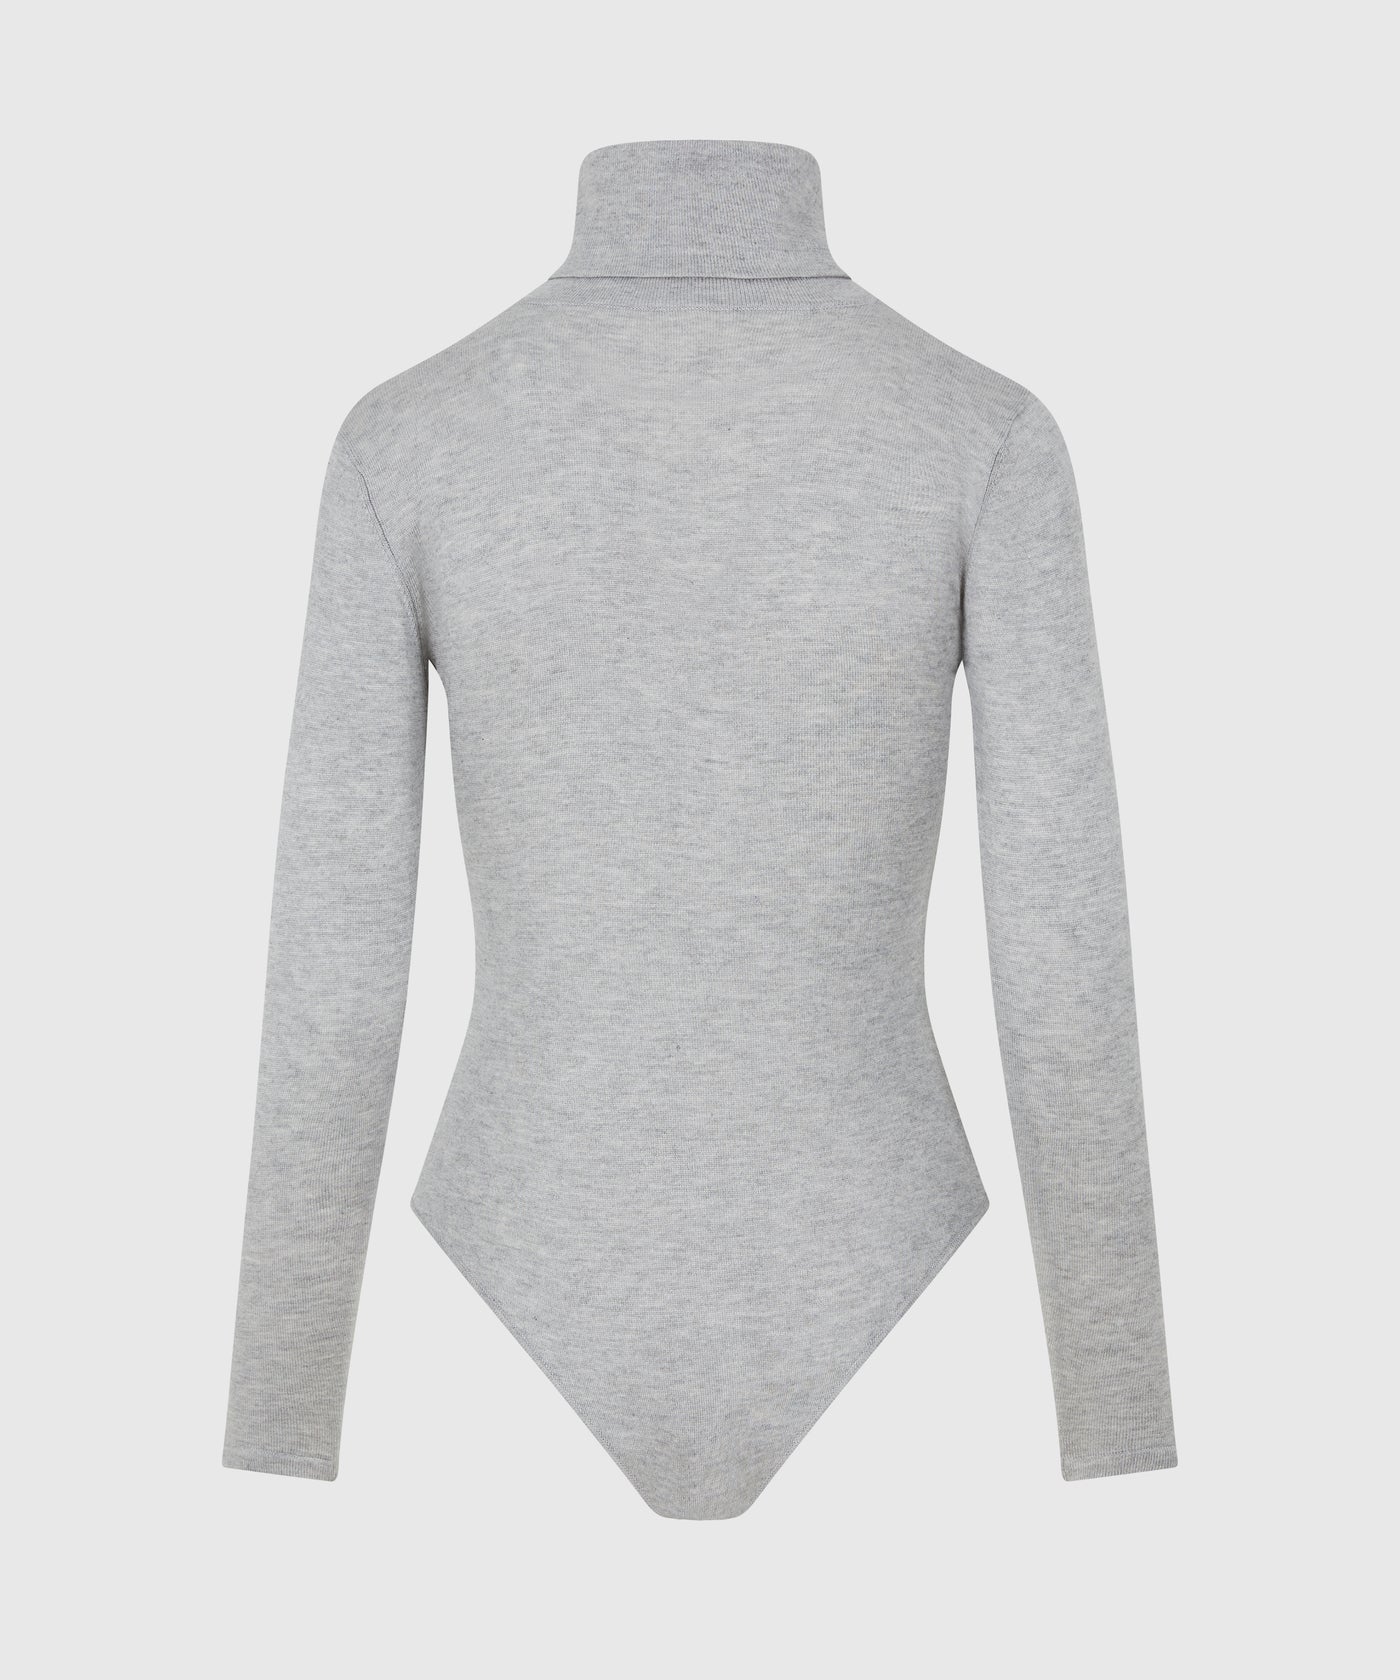 100% Silk and Cashmere Turtleneck Bodysuit - Grey